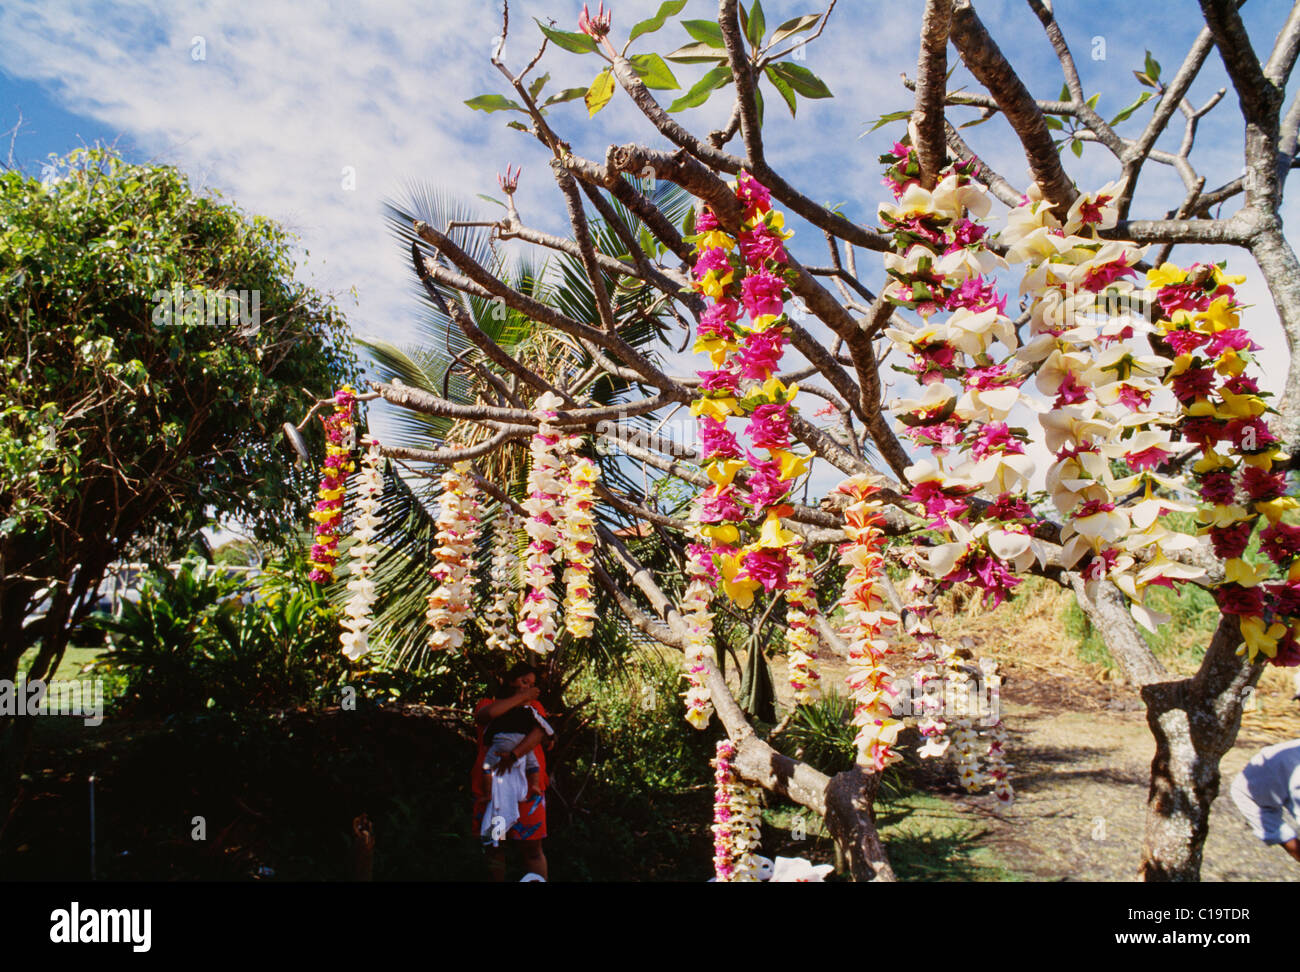 Plumeria leis hanging from tree, Hana, Maui, Hawaii Stock Photo